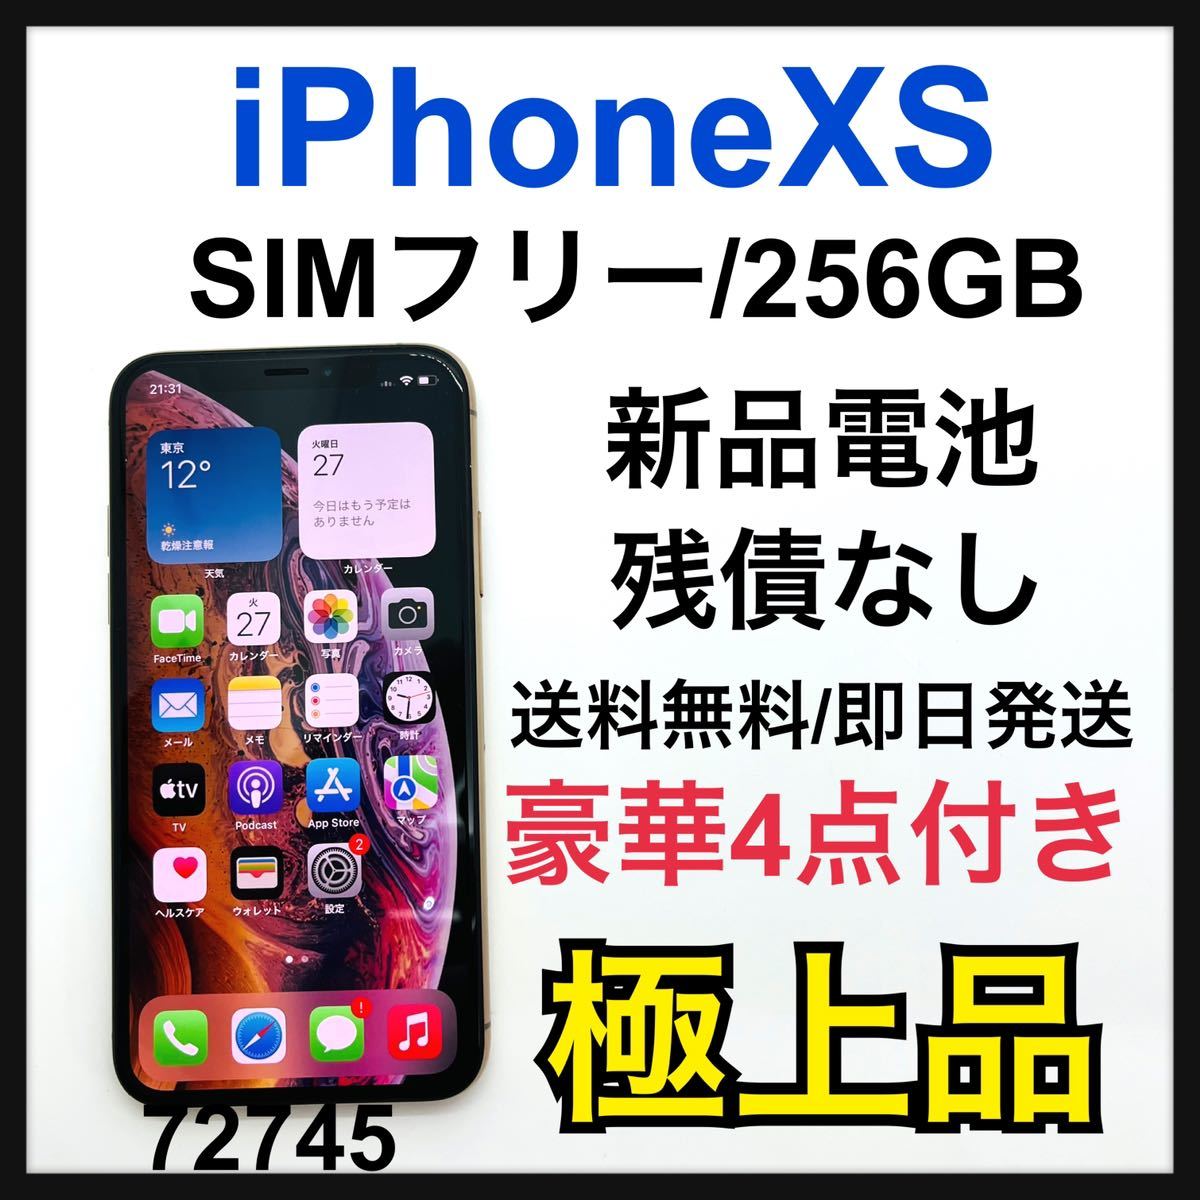 S 新品電池 iPhone Xs Gold 256 GB SIMフリー 本体 スマホ スマホ